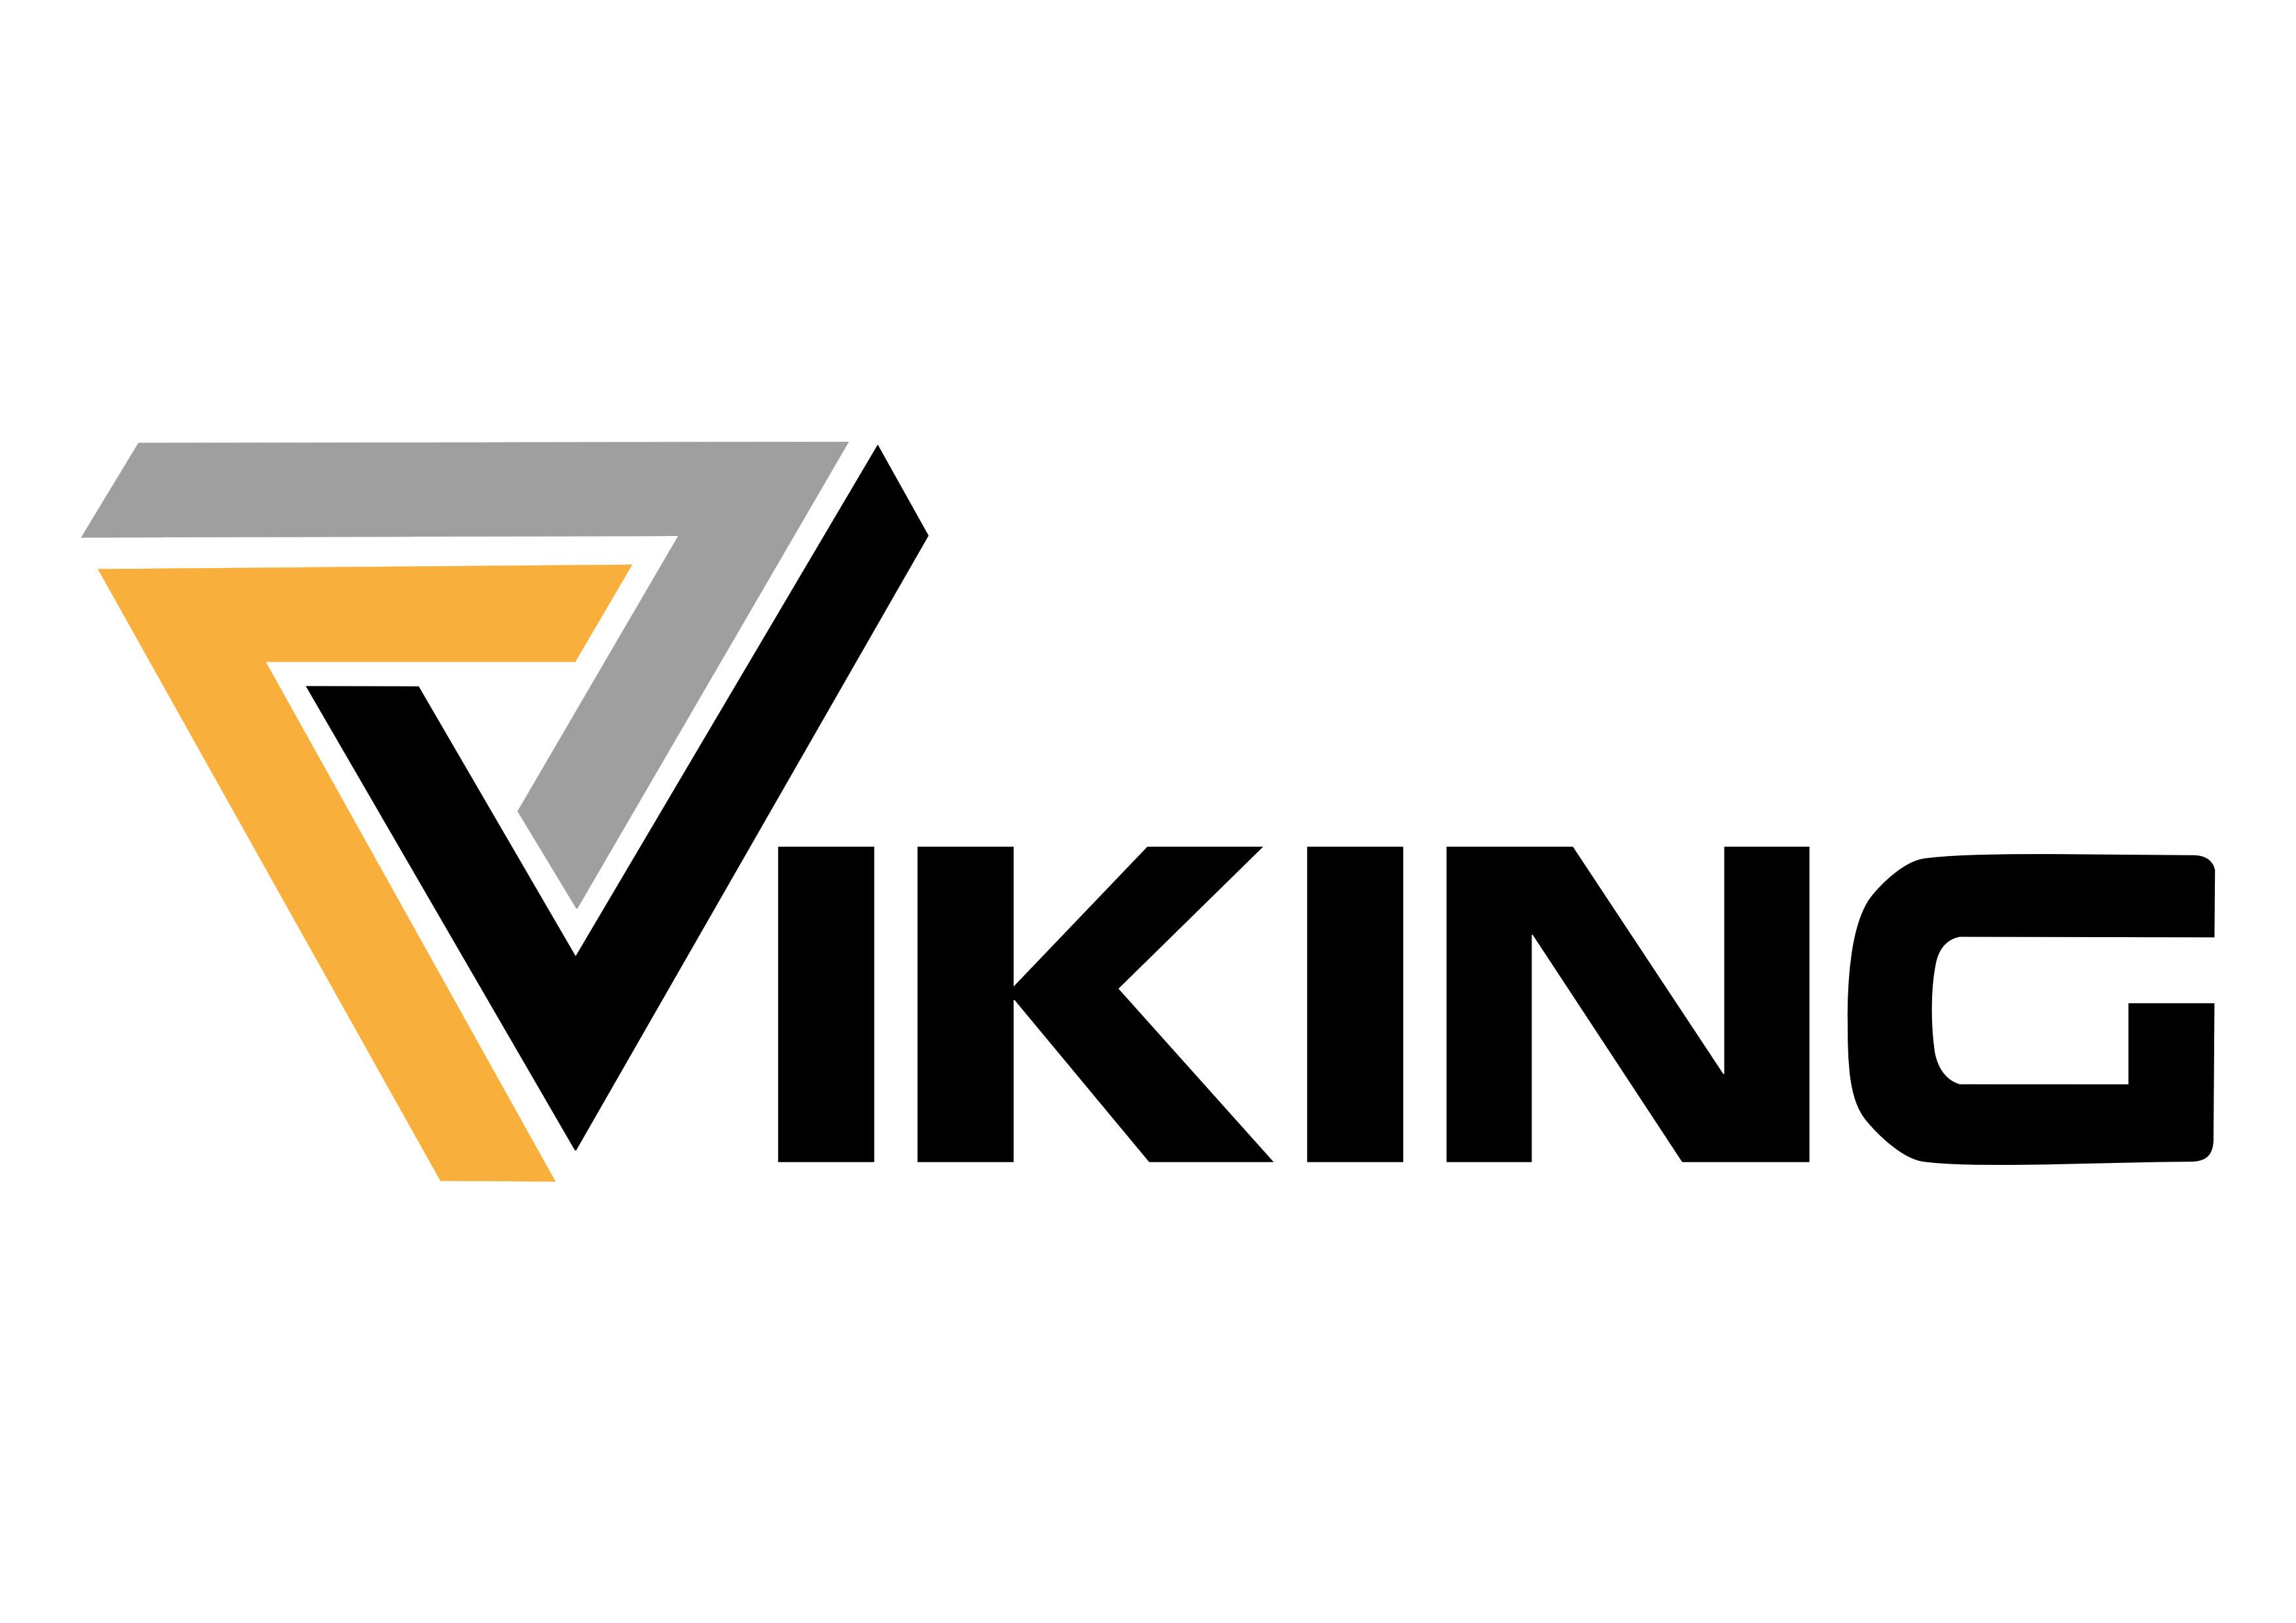 Construction Viking